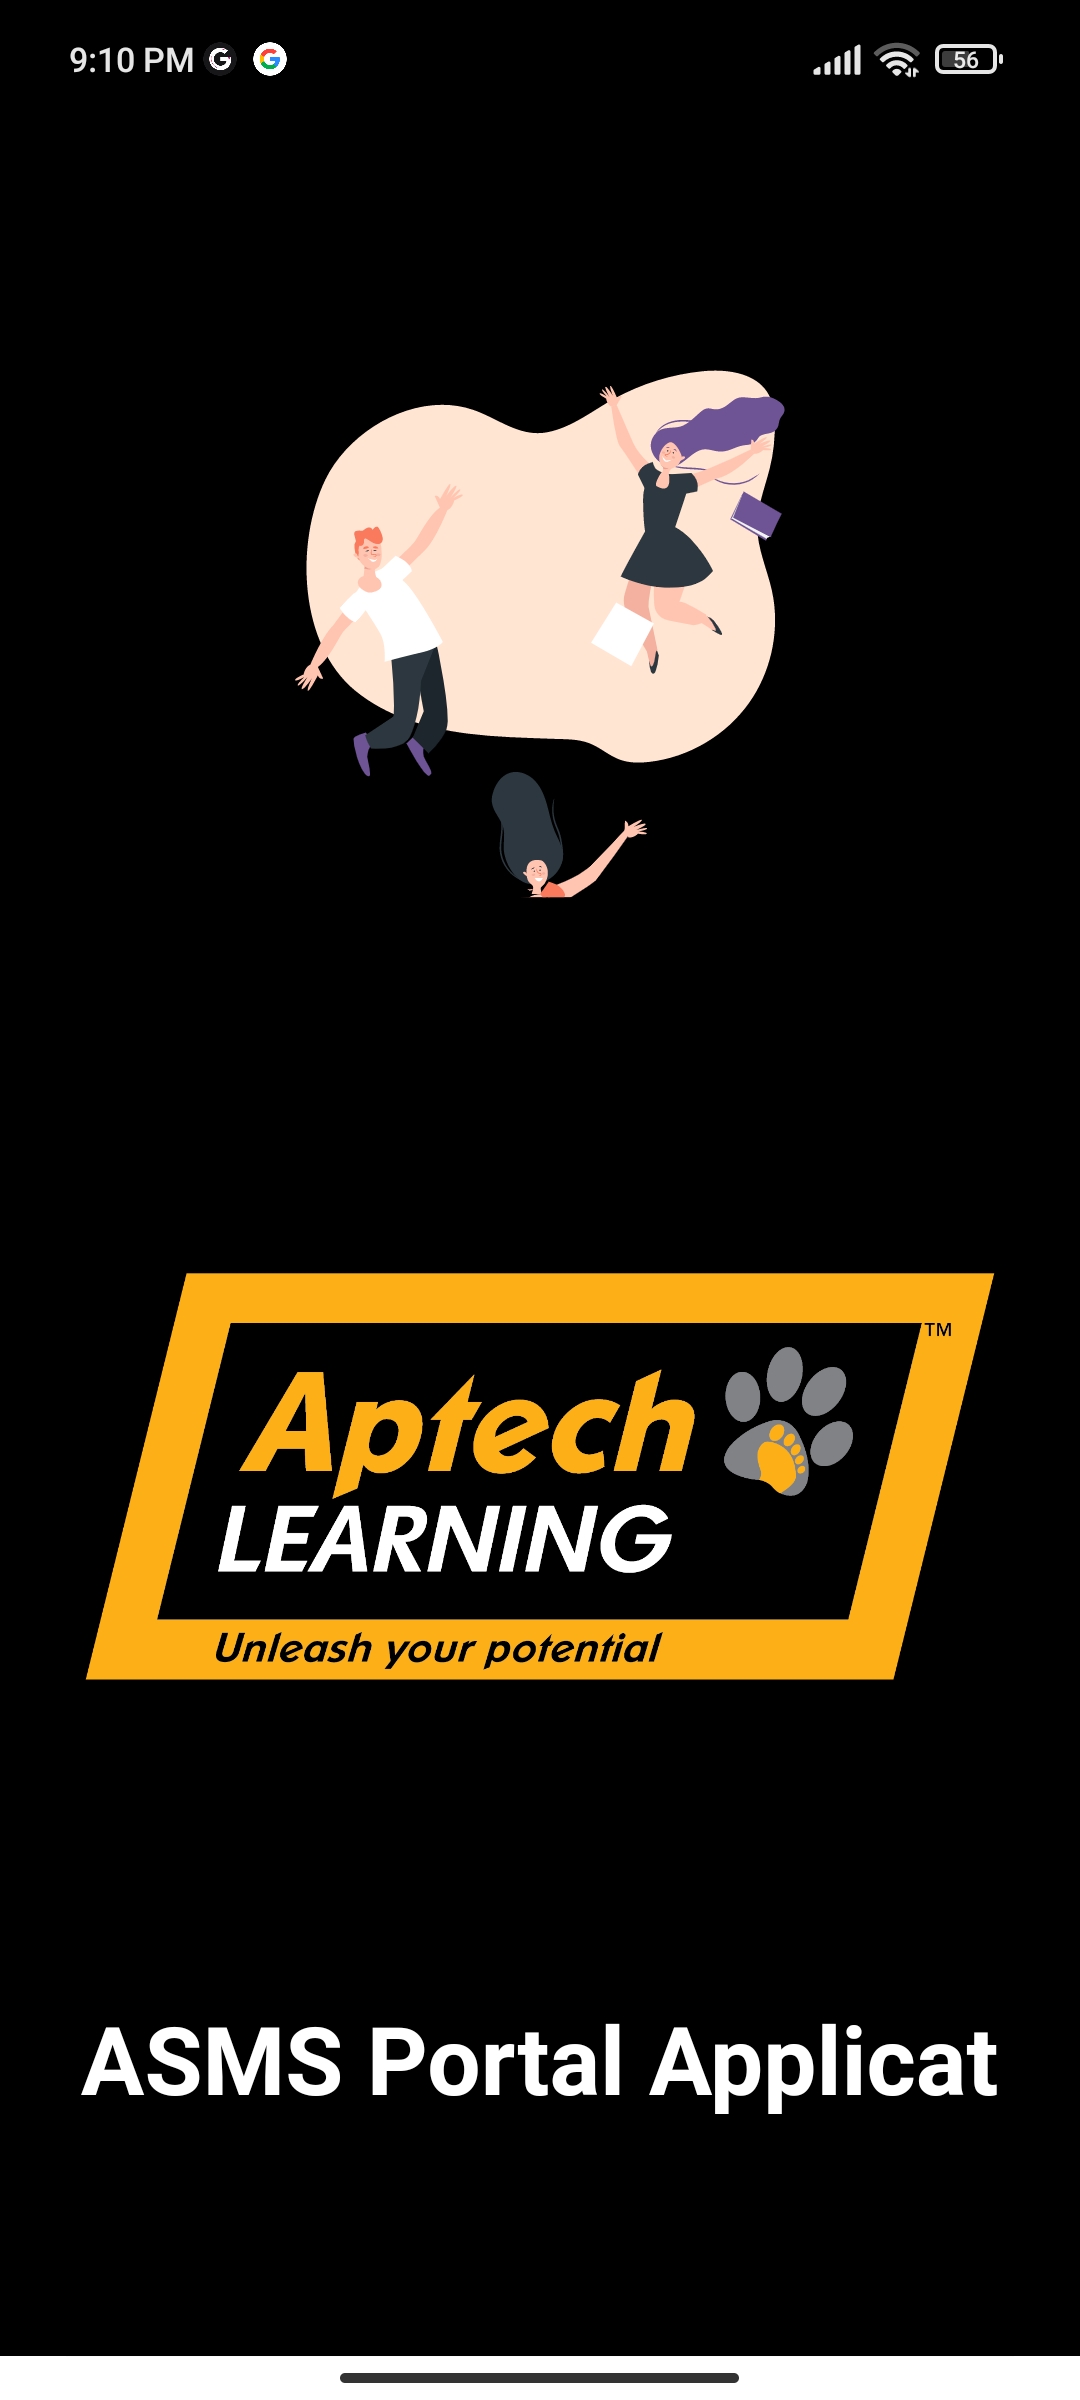 ASMS Portal for Aptech